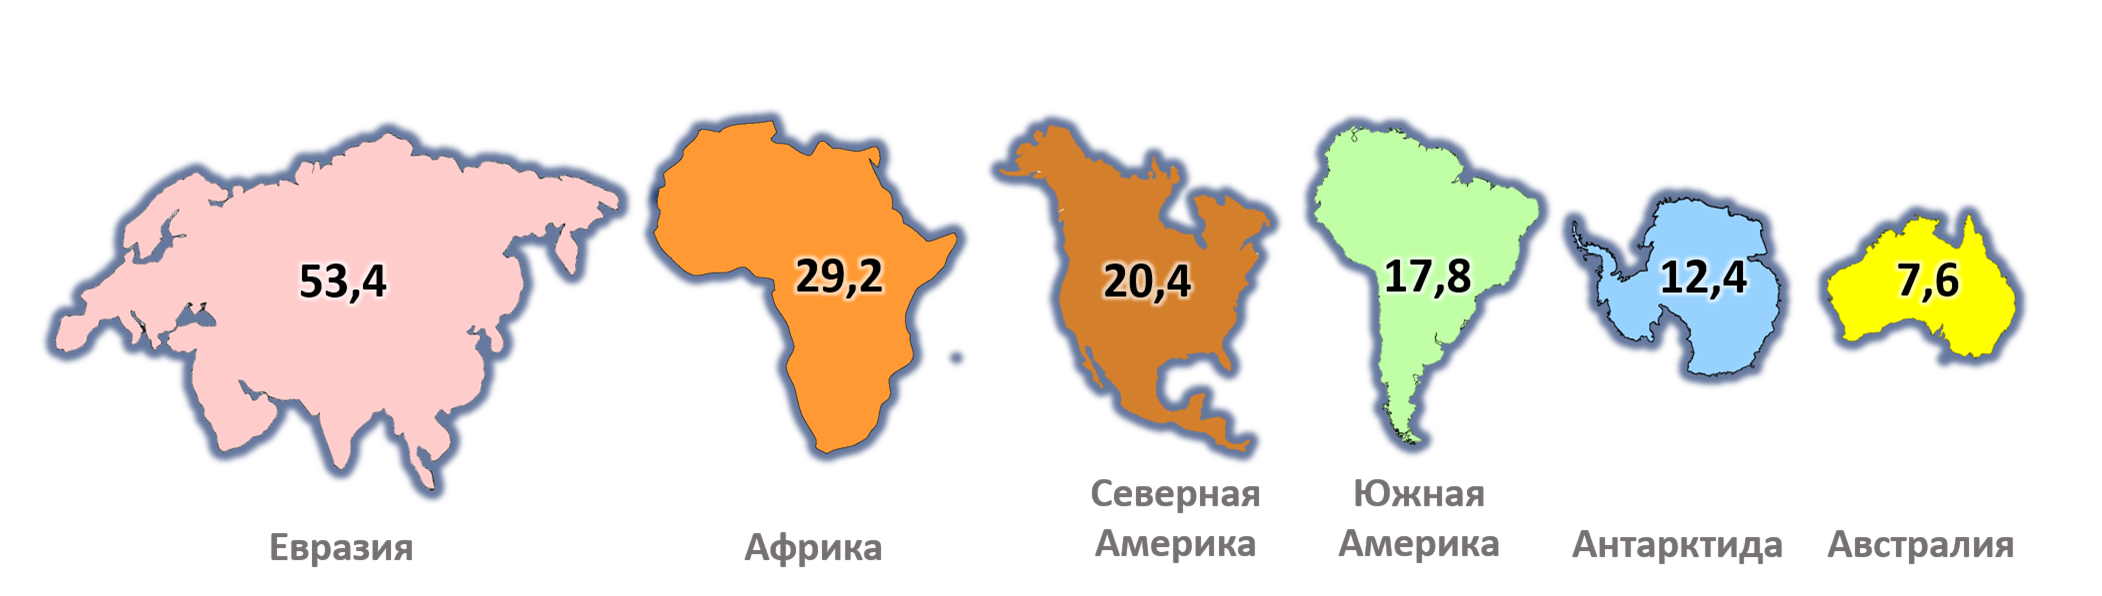 Место занимаемое евразией среди материков. Евразия Африка Северная Америка Южная Америка Австралия Антарктида. Сравнение размеров материков на карте. Размеры материков по площади.